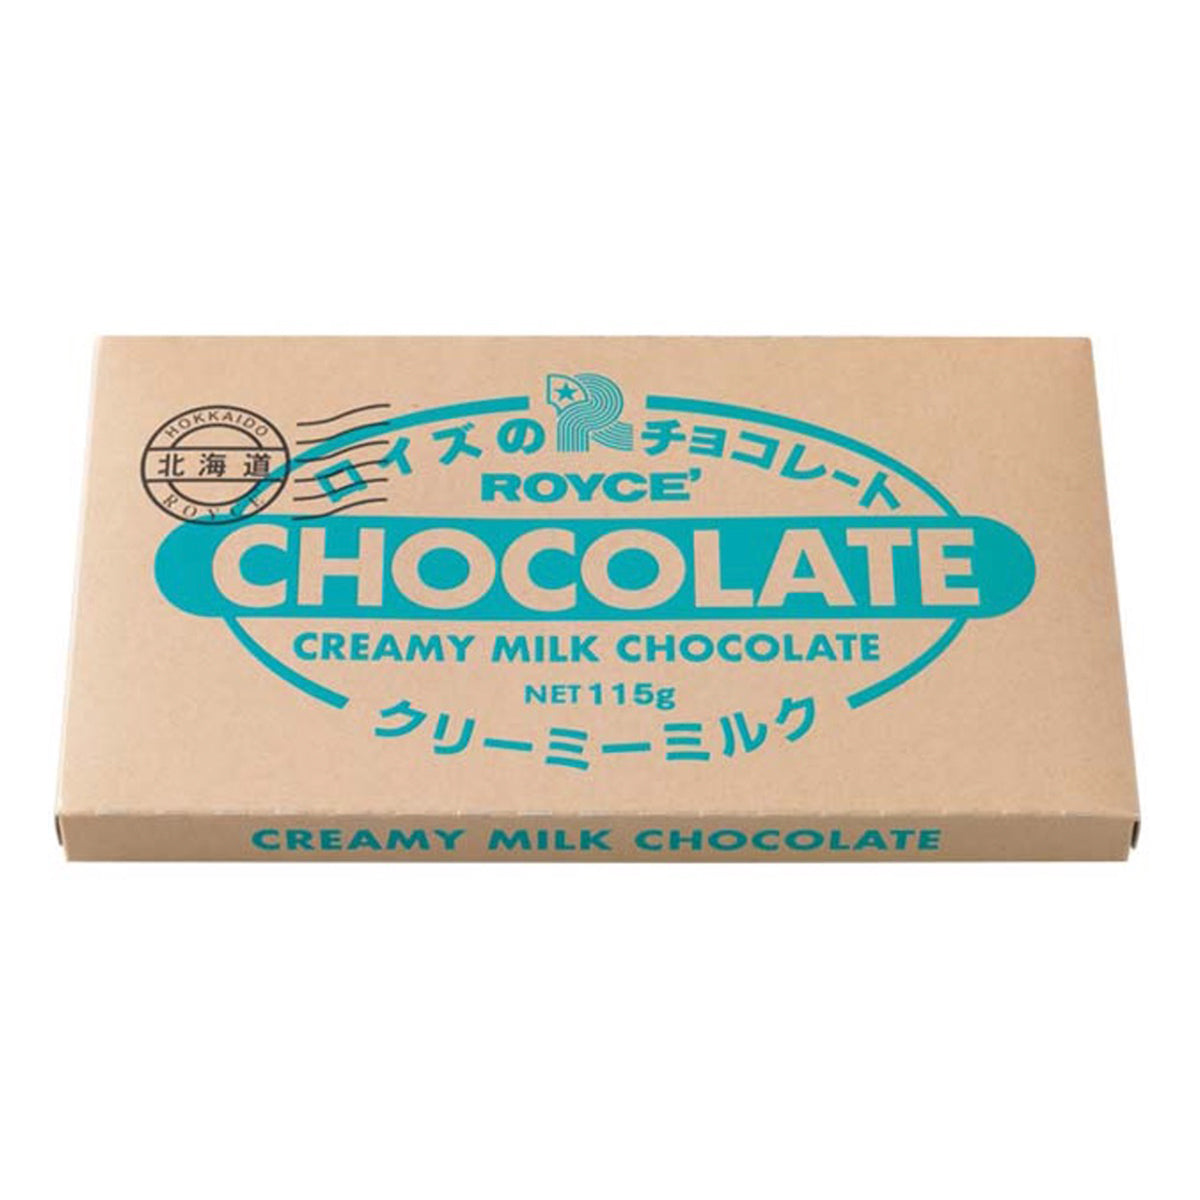 ROYCE' Chocolate - Chocolate Bar "Creamy Milk" - Image shows a chocolate carton. Text in black says Hokkaido ROYCE'. Text in blue says ROYCE' Chocolate Creamy Milk Chocolate Net 115g. Text on bottom part says Creamy Milk Chocolate.